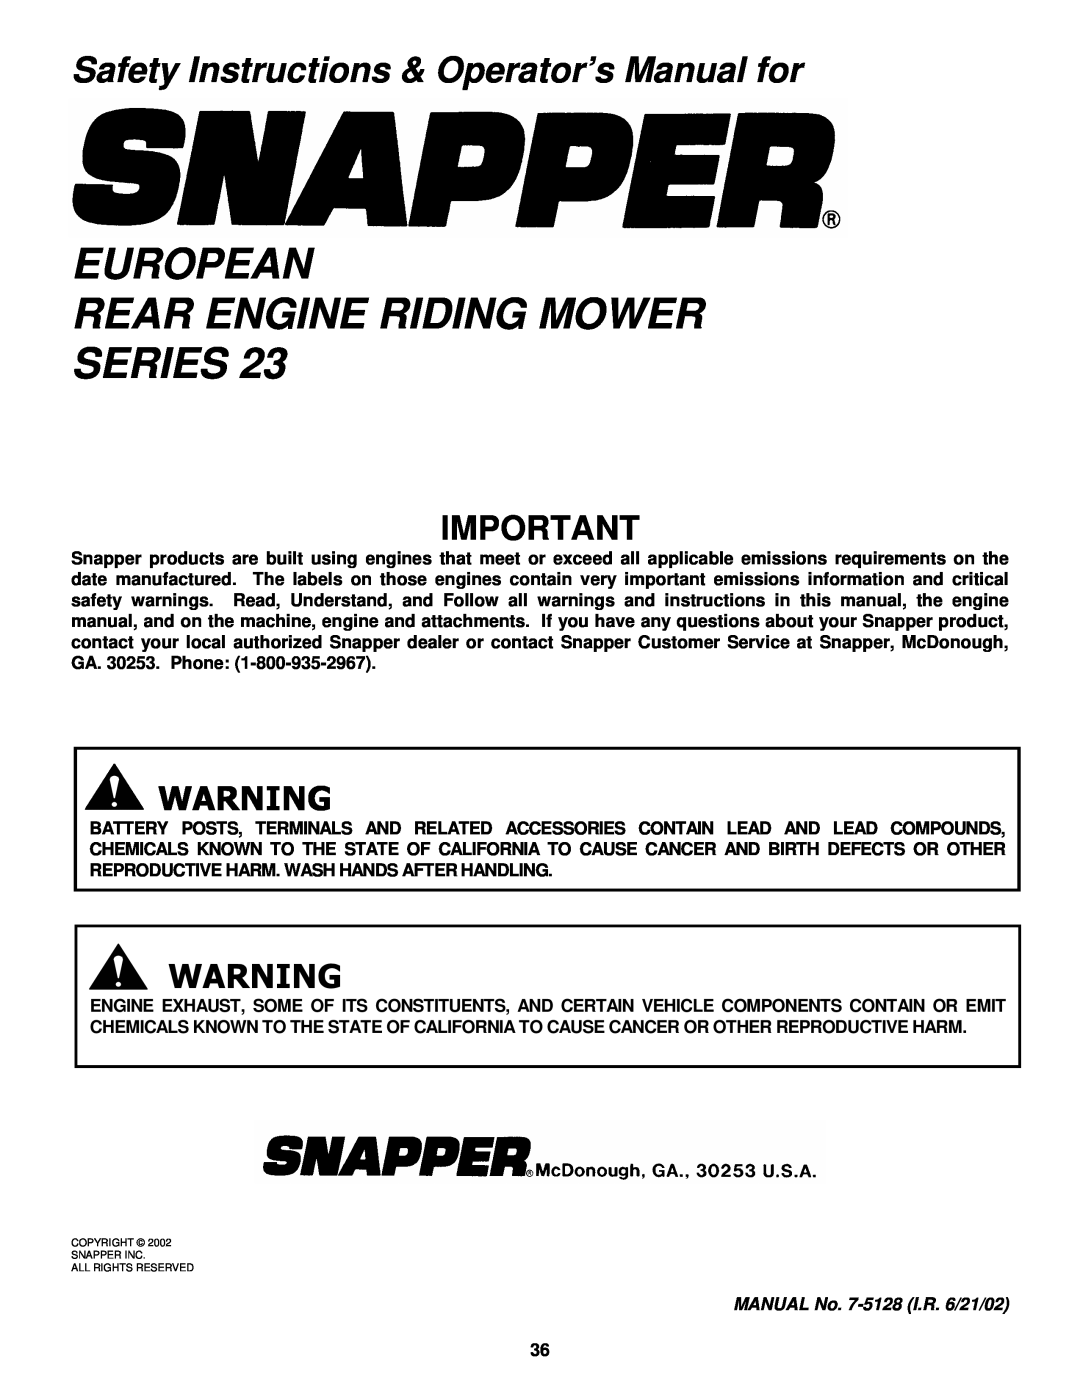 Snapper E281123BVE, E281323BVE, E331523KVE European Rear Engine Riding Mower Series, MANUAL No. 7-5128I.R. 6/21/02 